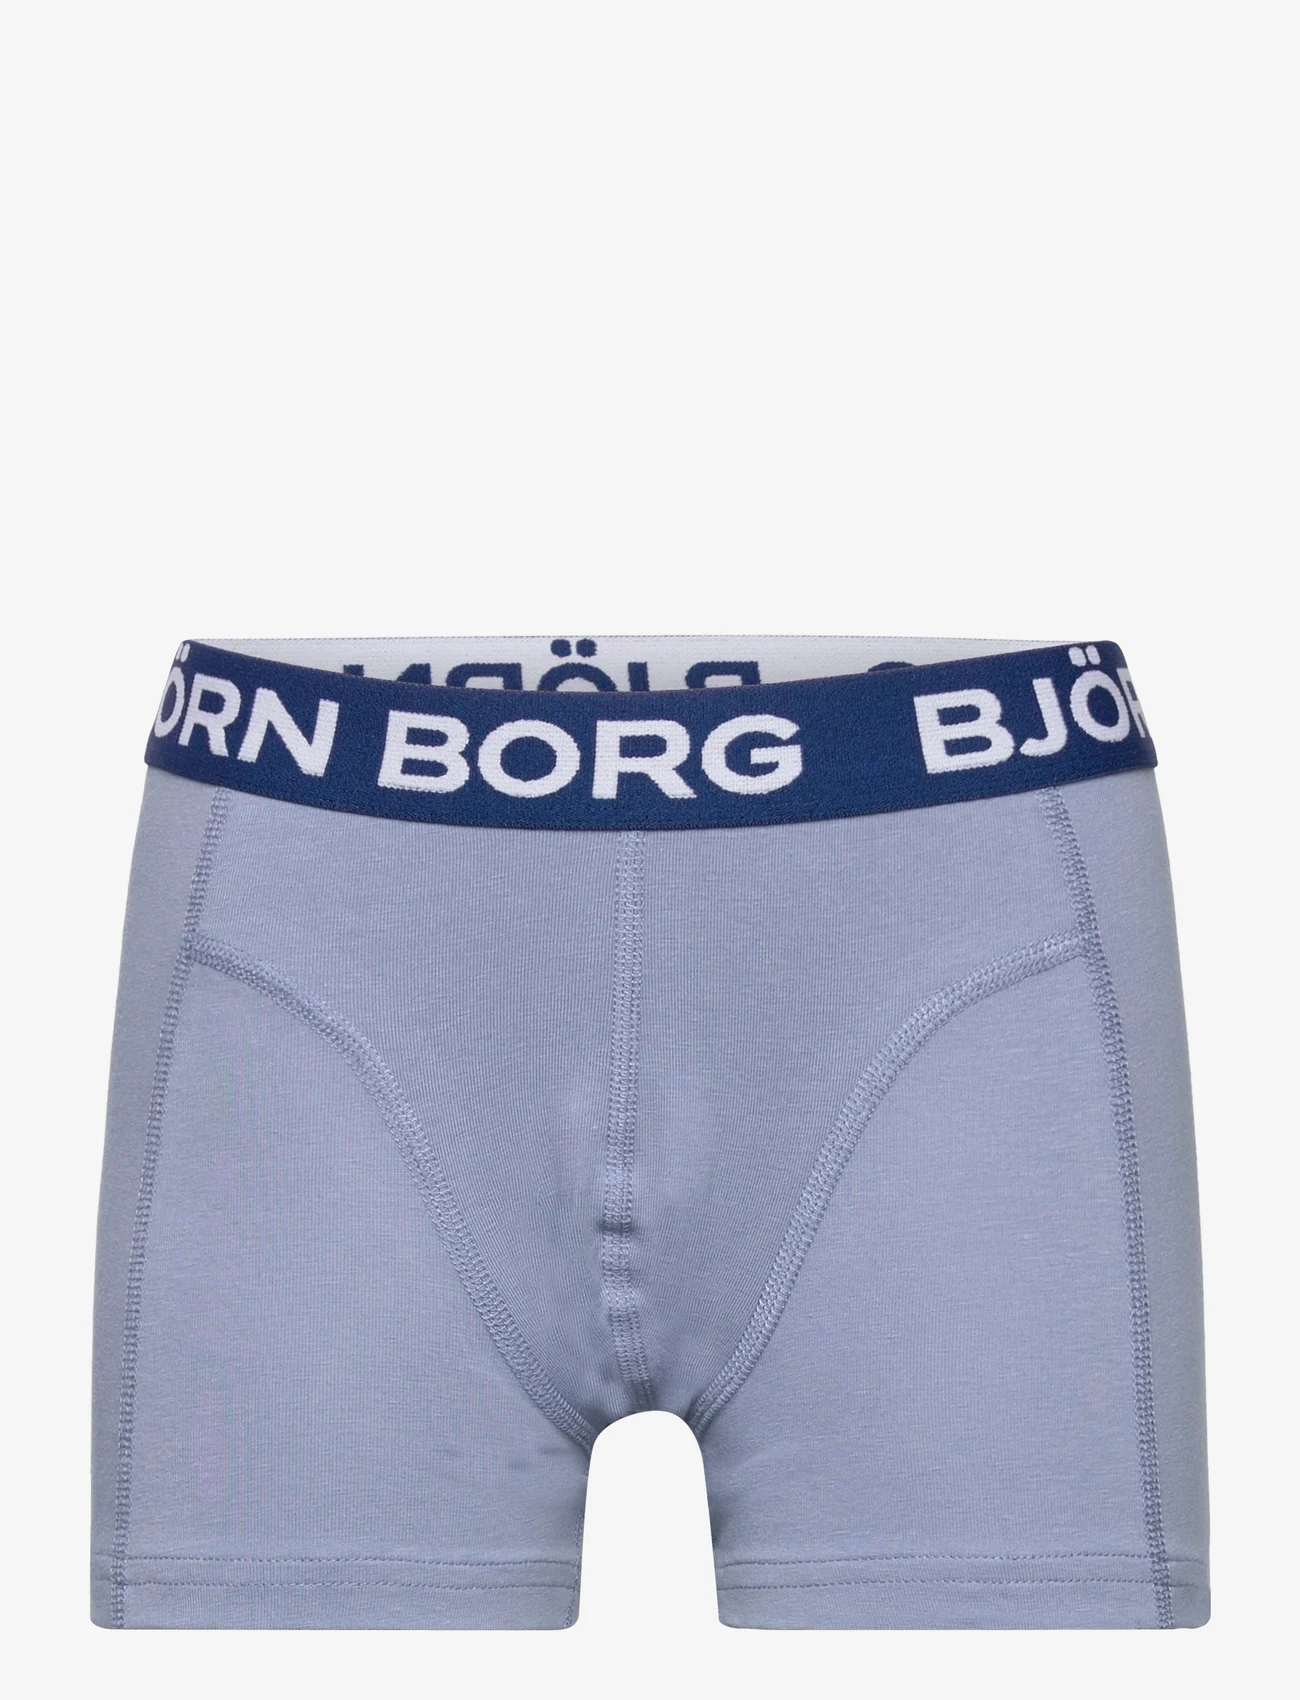 Björn Borg - CORE BOXER 3p - apatinės kelnaitės - multipack 3 - 1